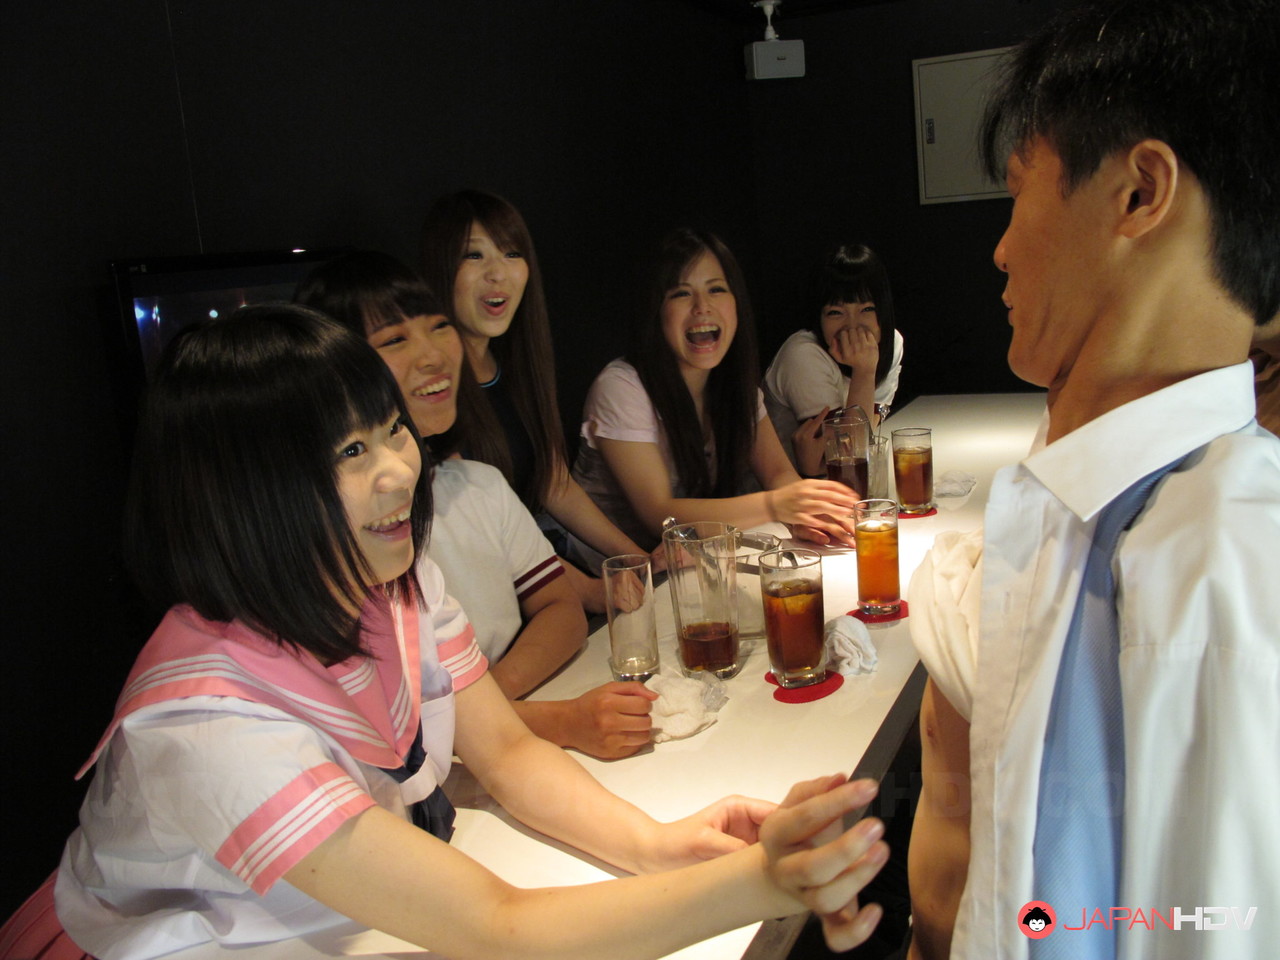 Asian cutie Mio Kosaki and her friends suck and jerk off dongs in a bar порно фото #426551978 | Japan HDV Pics, Mio Kosaki, Seiko Ida, Yuri Sakura, Japanese, мобильное порно